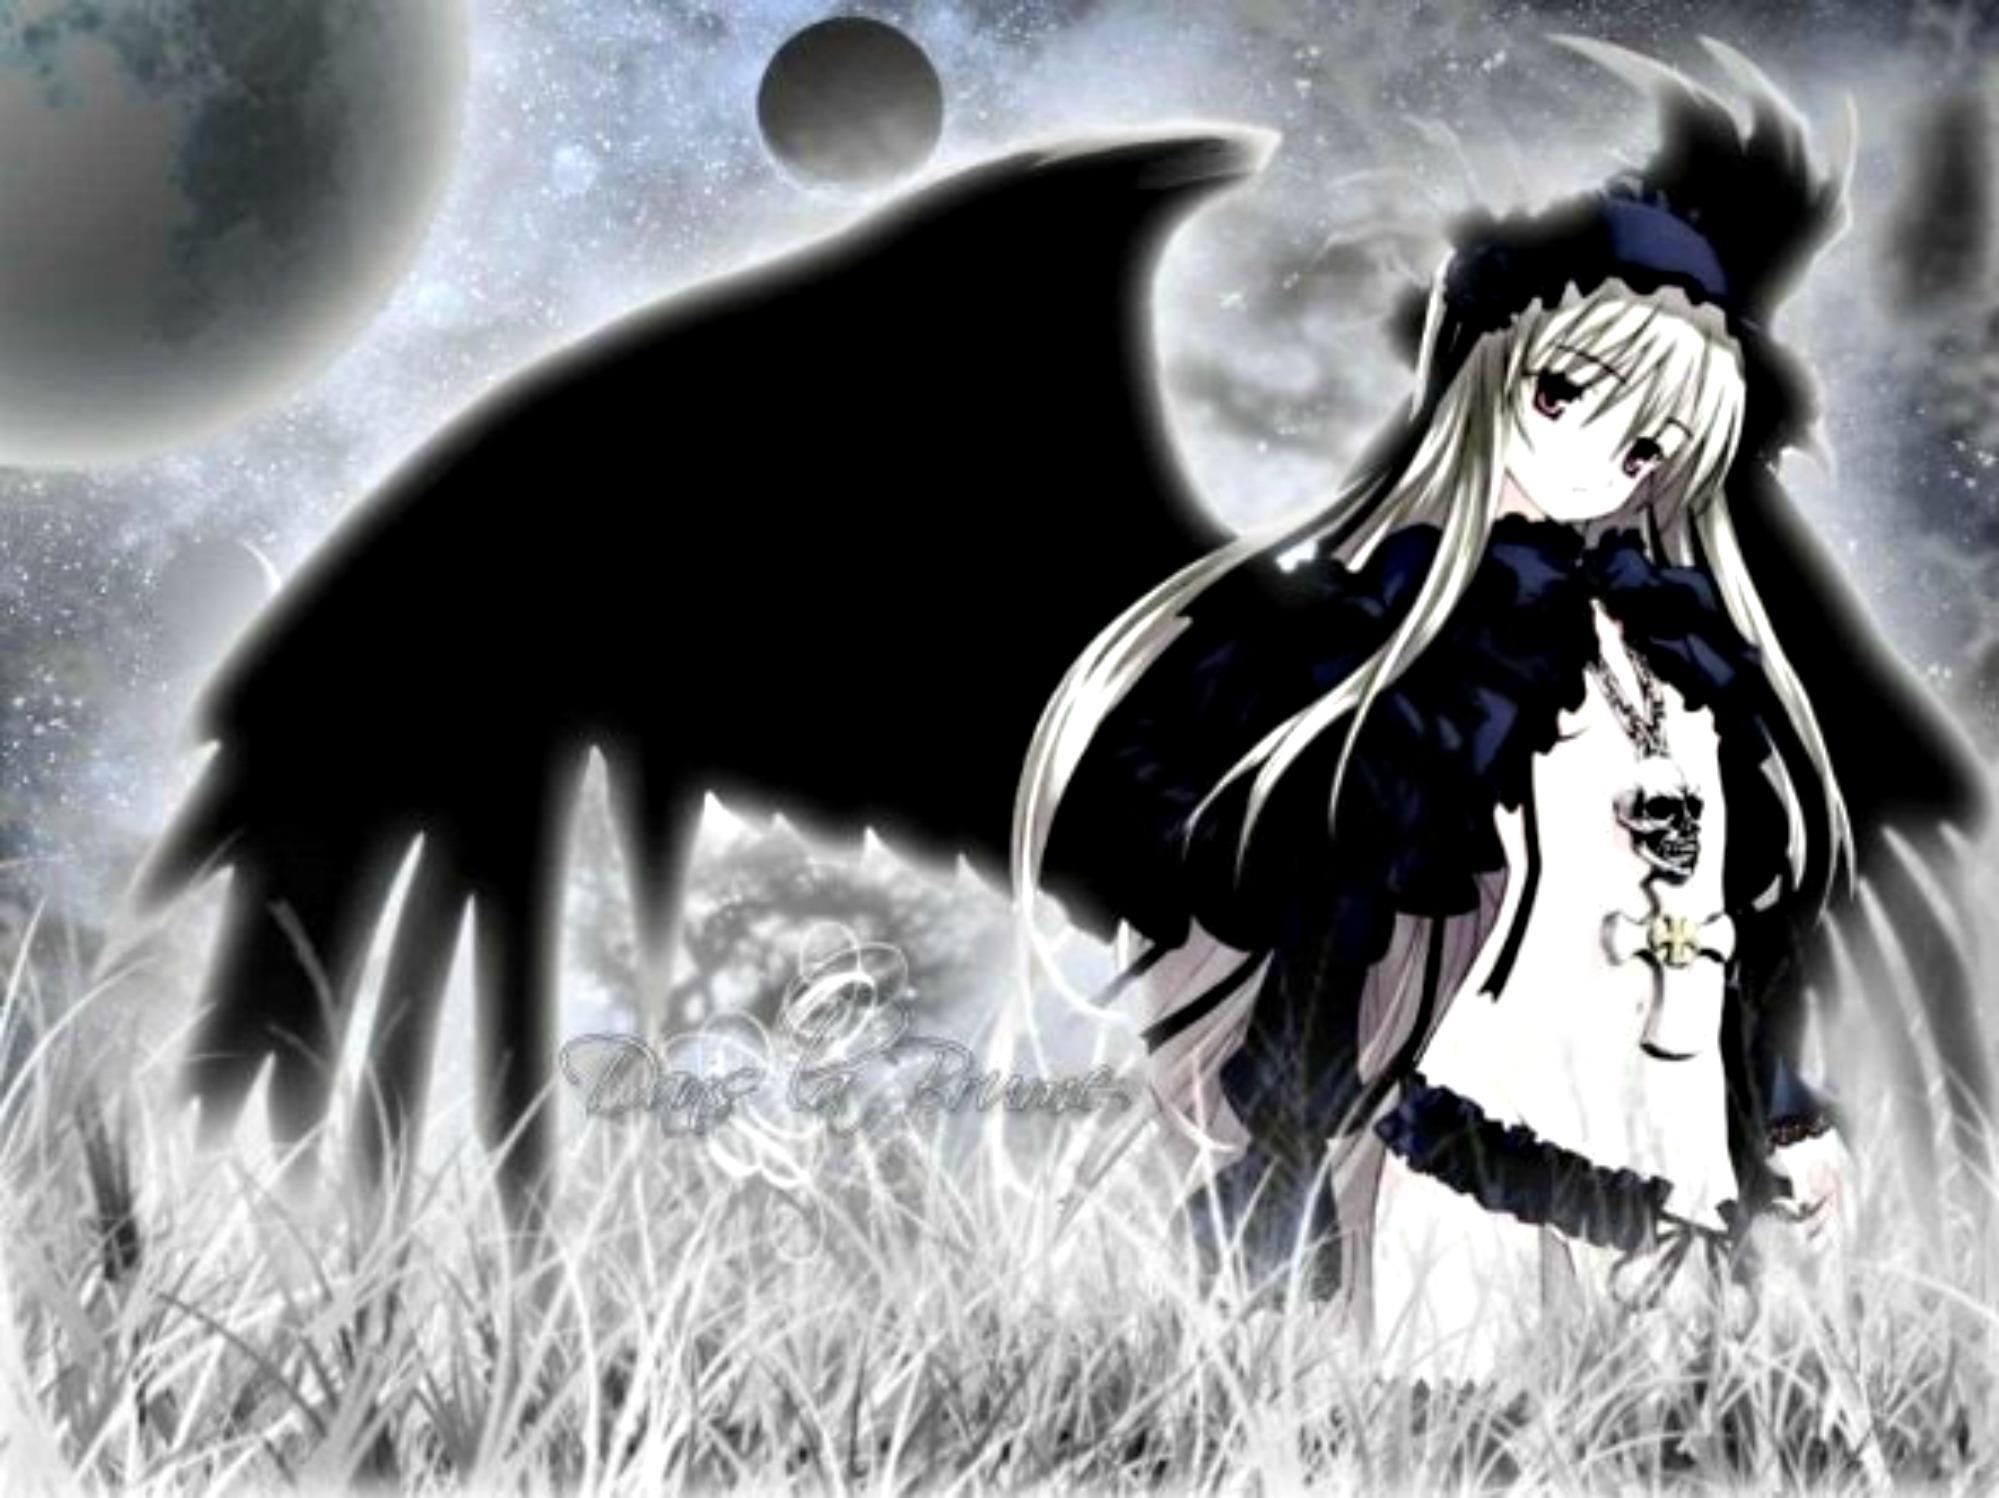 black angel anime